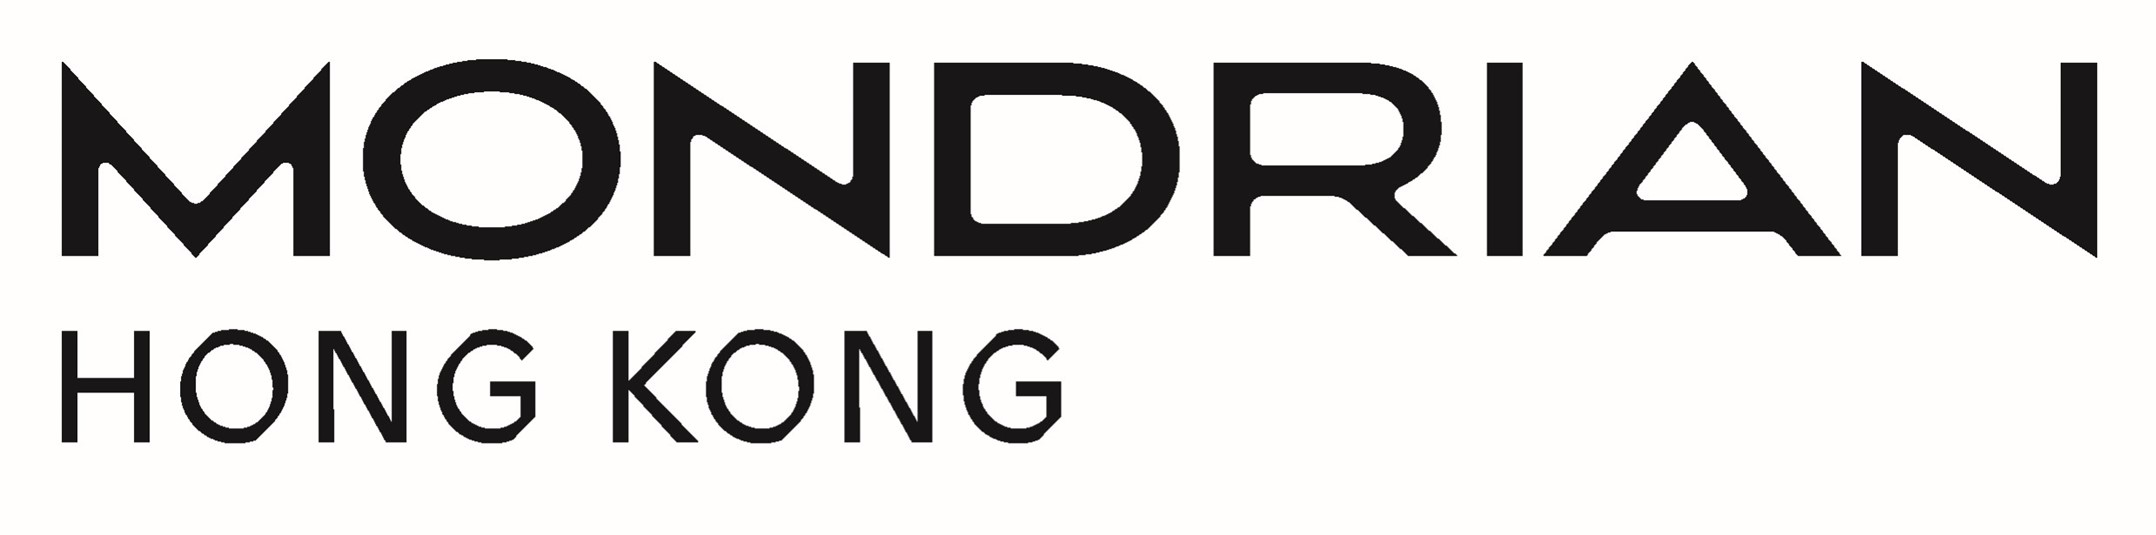 logo-mondrian-hong-kong